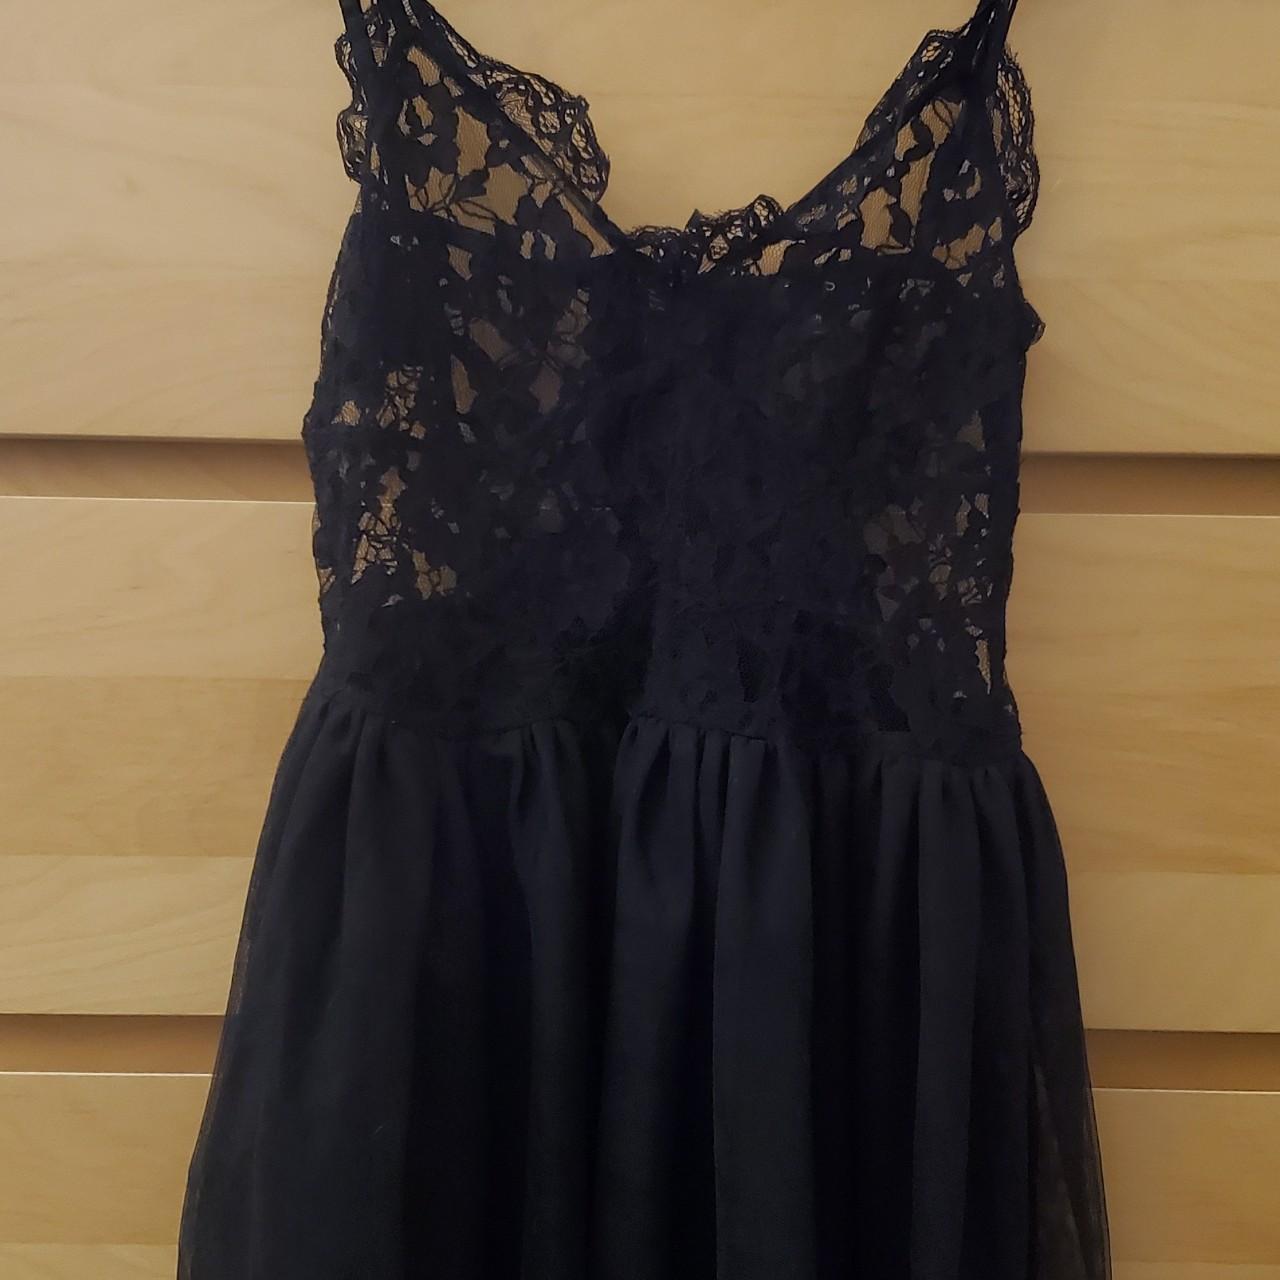 Black lace & tulle/mesh dress - Depop